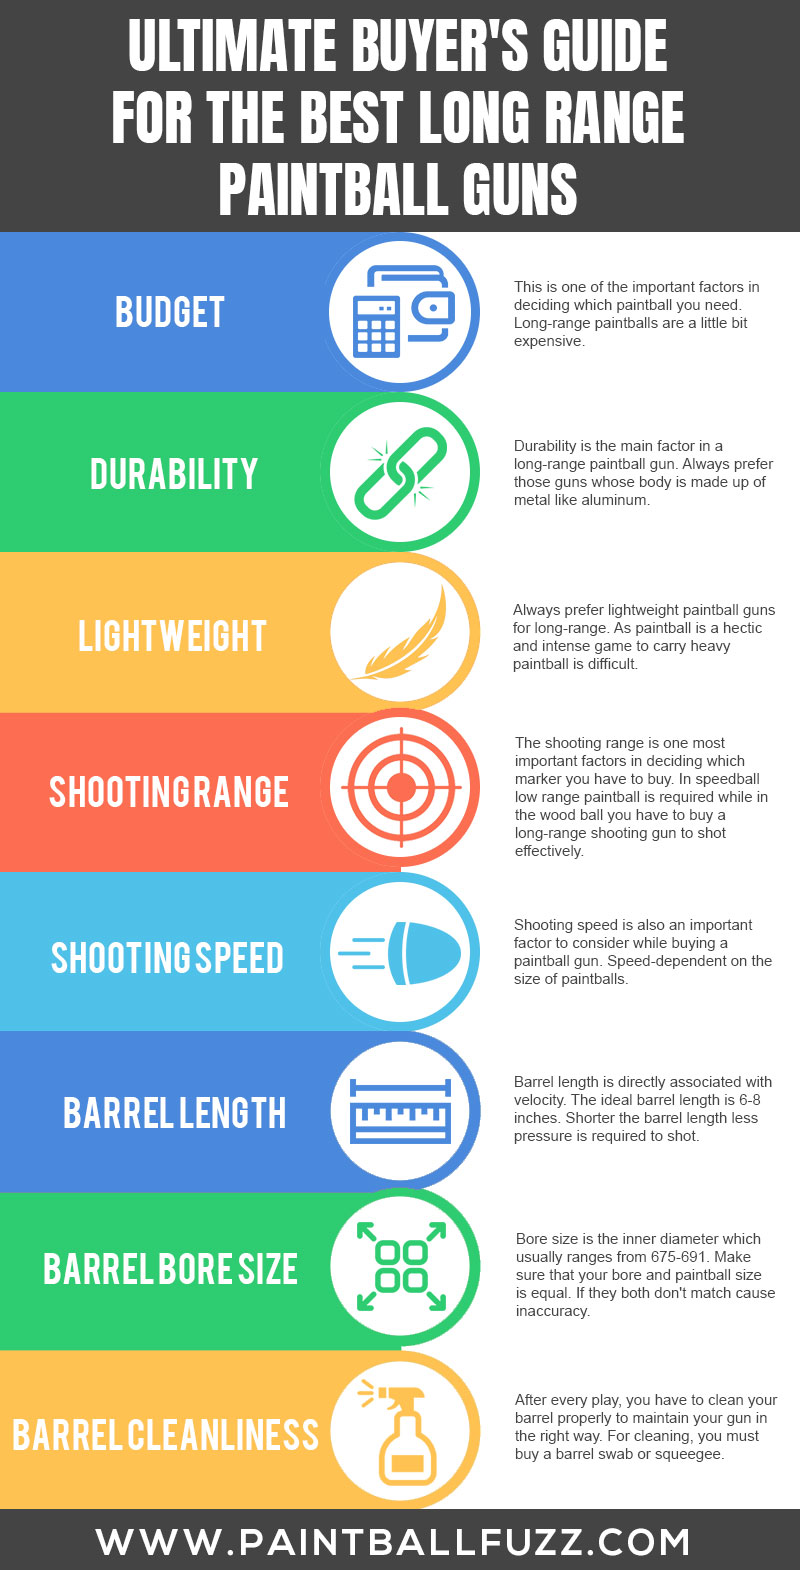 Ultimate Buyer's Guide for the Best Long Range Paintball Guns